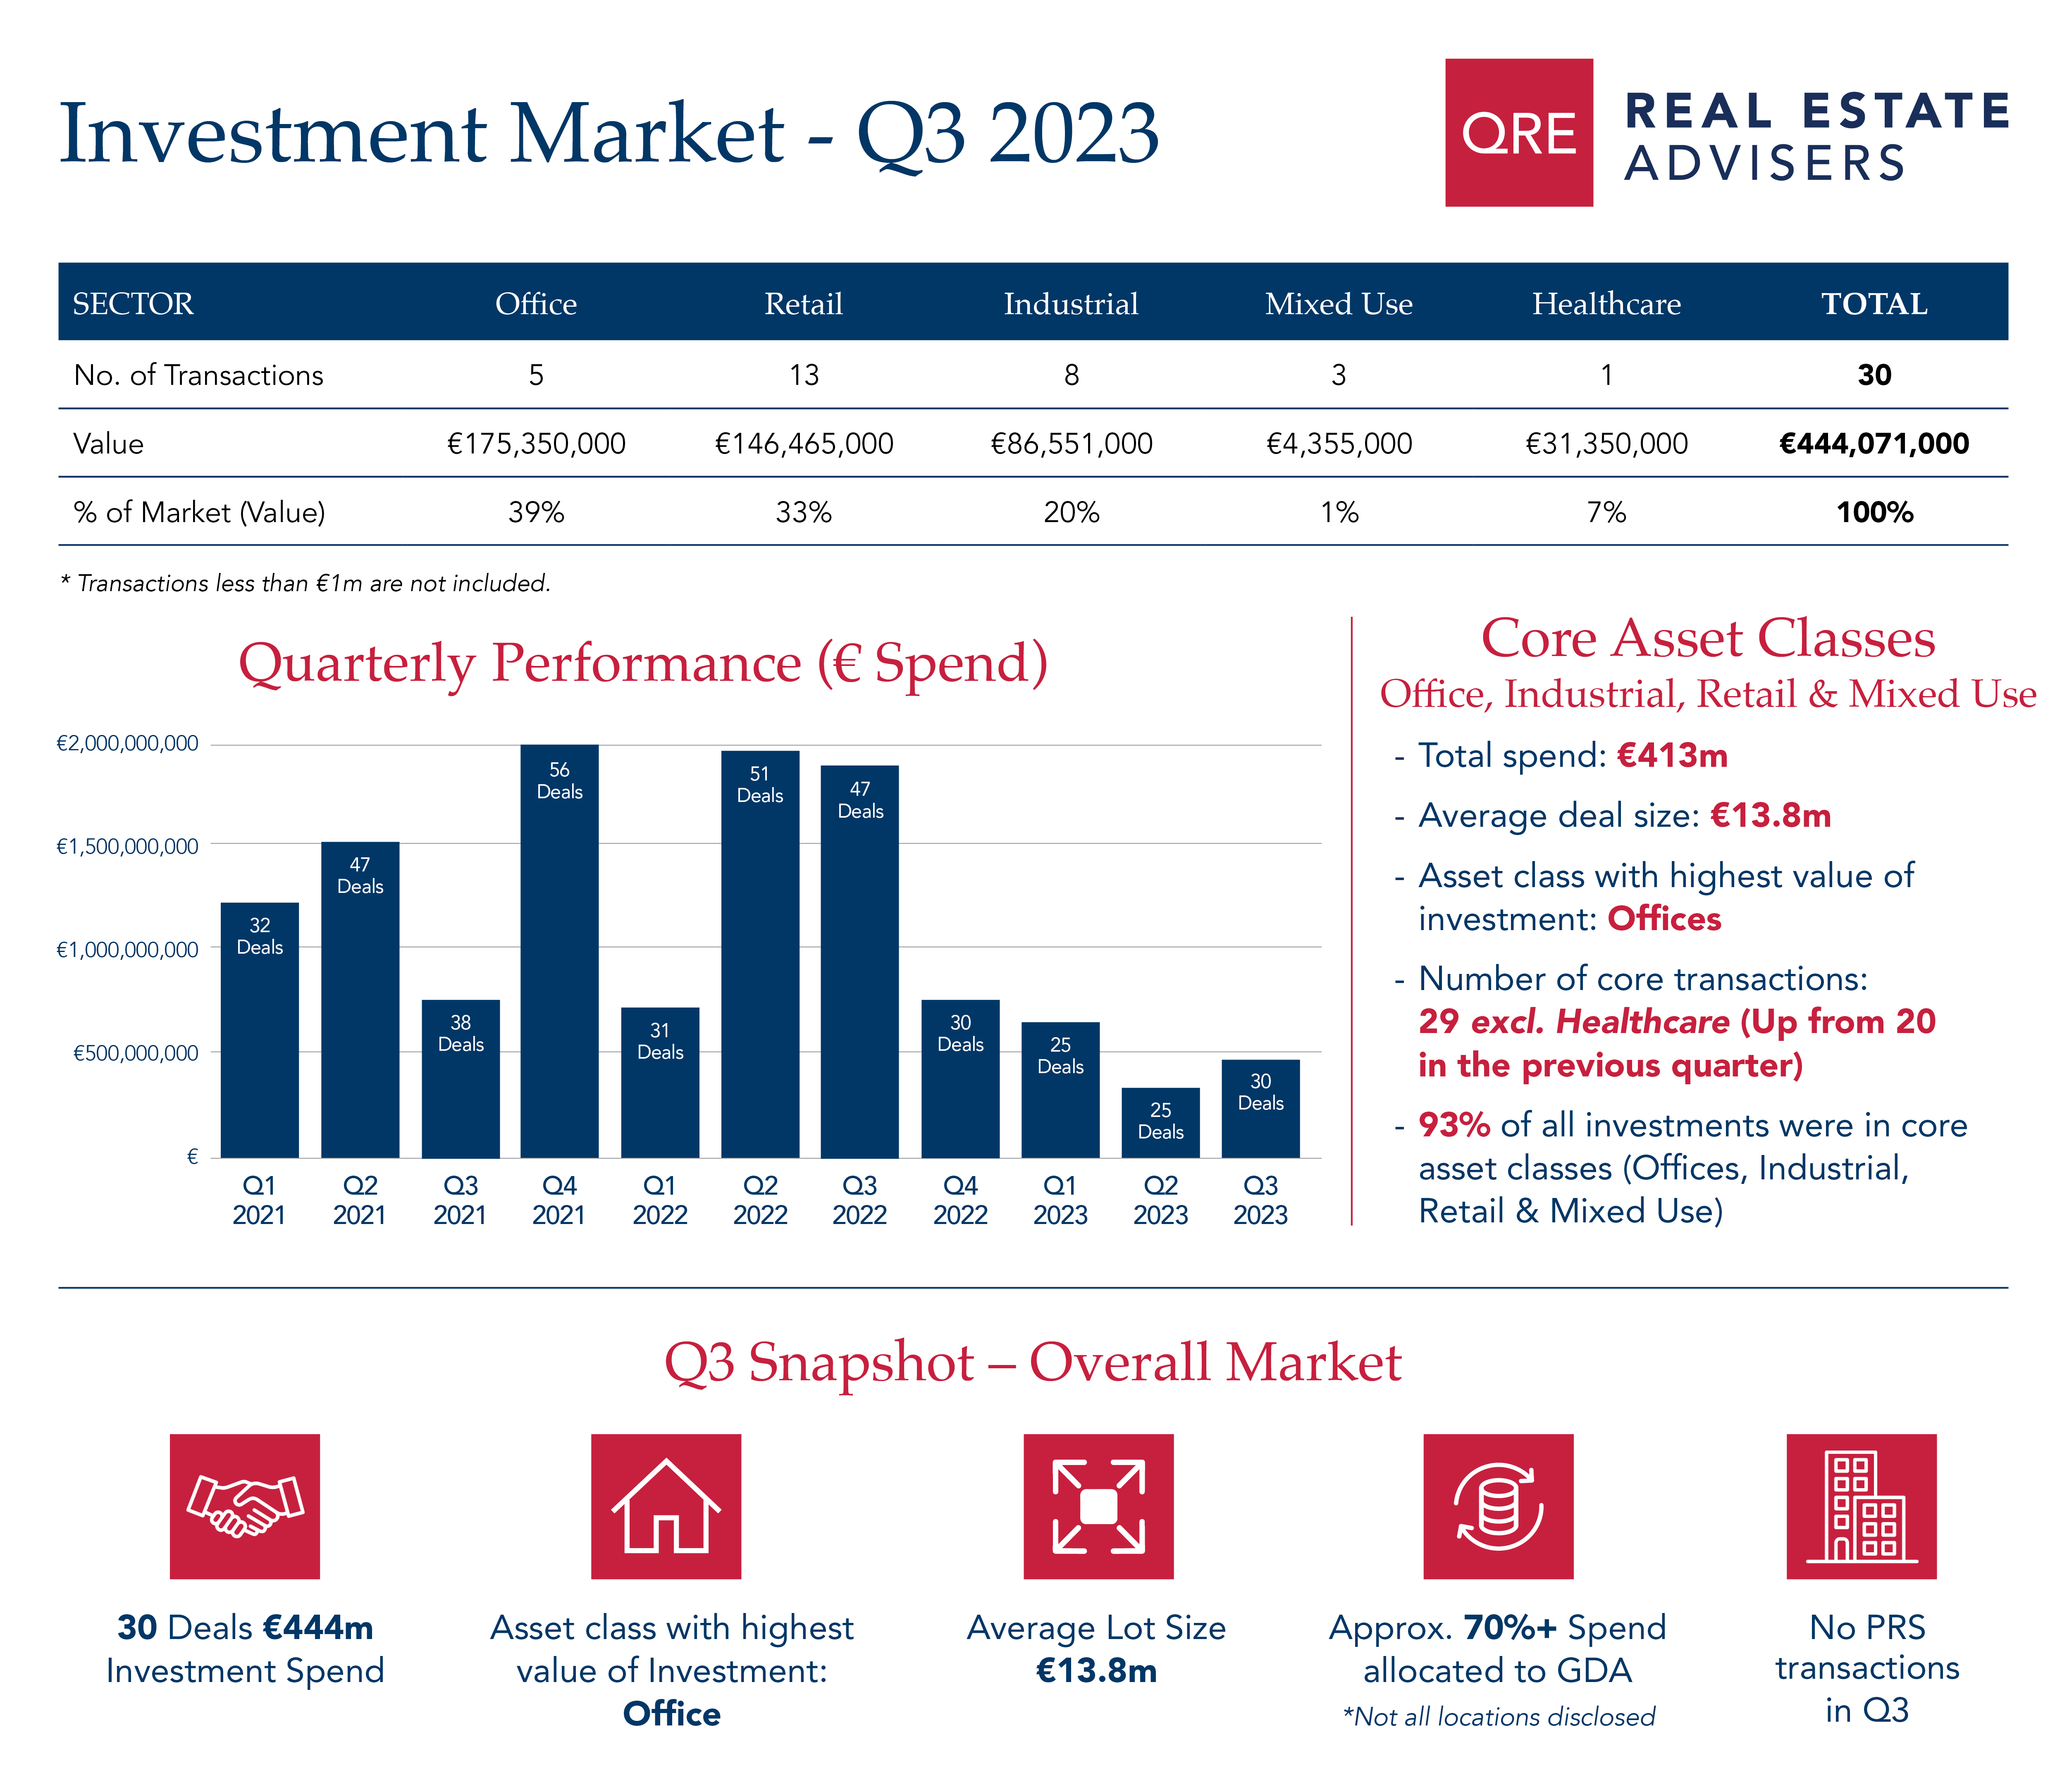 QRE Q3 2023 Investment Market Analysis